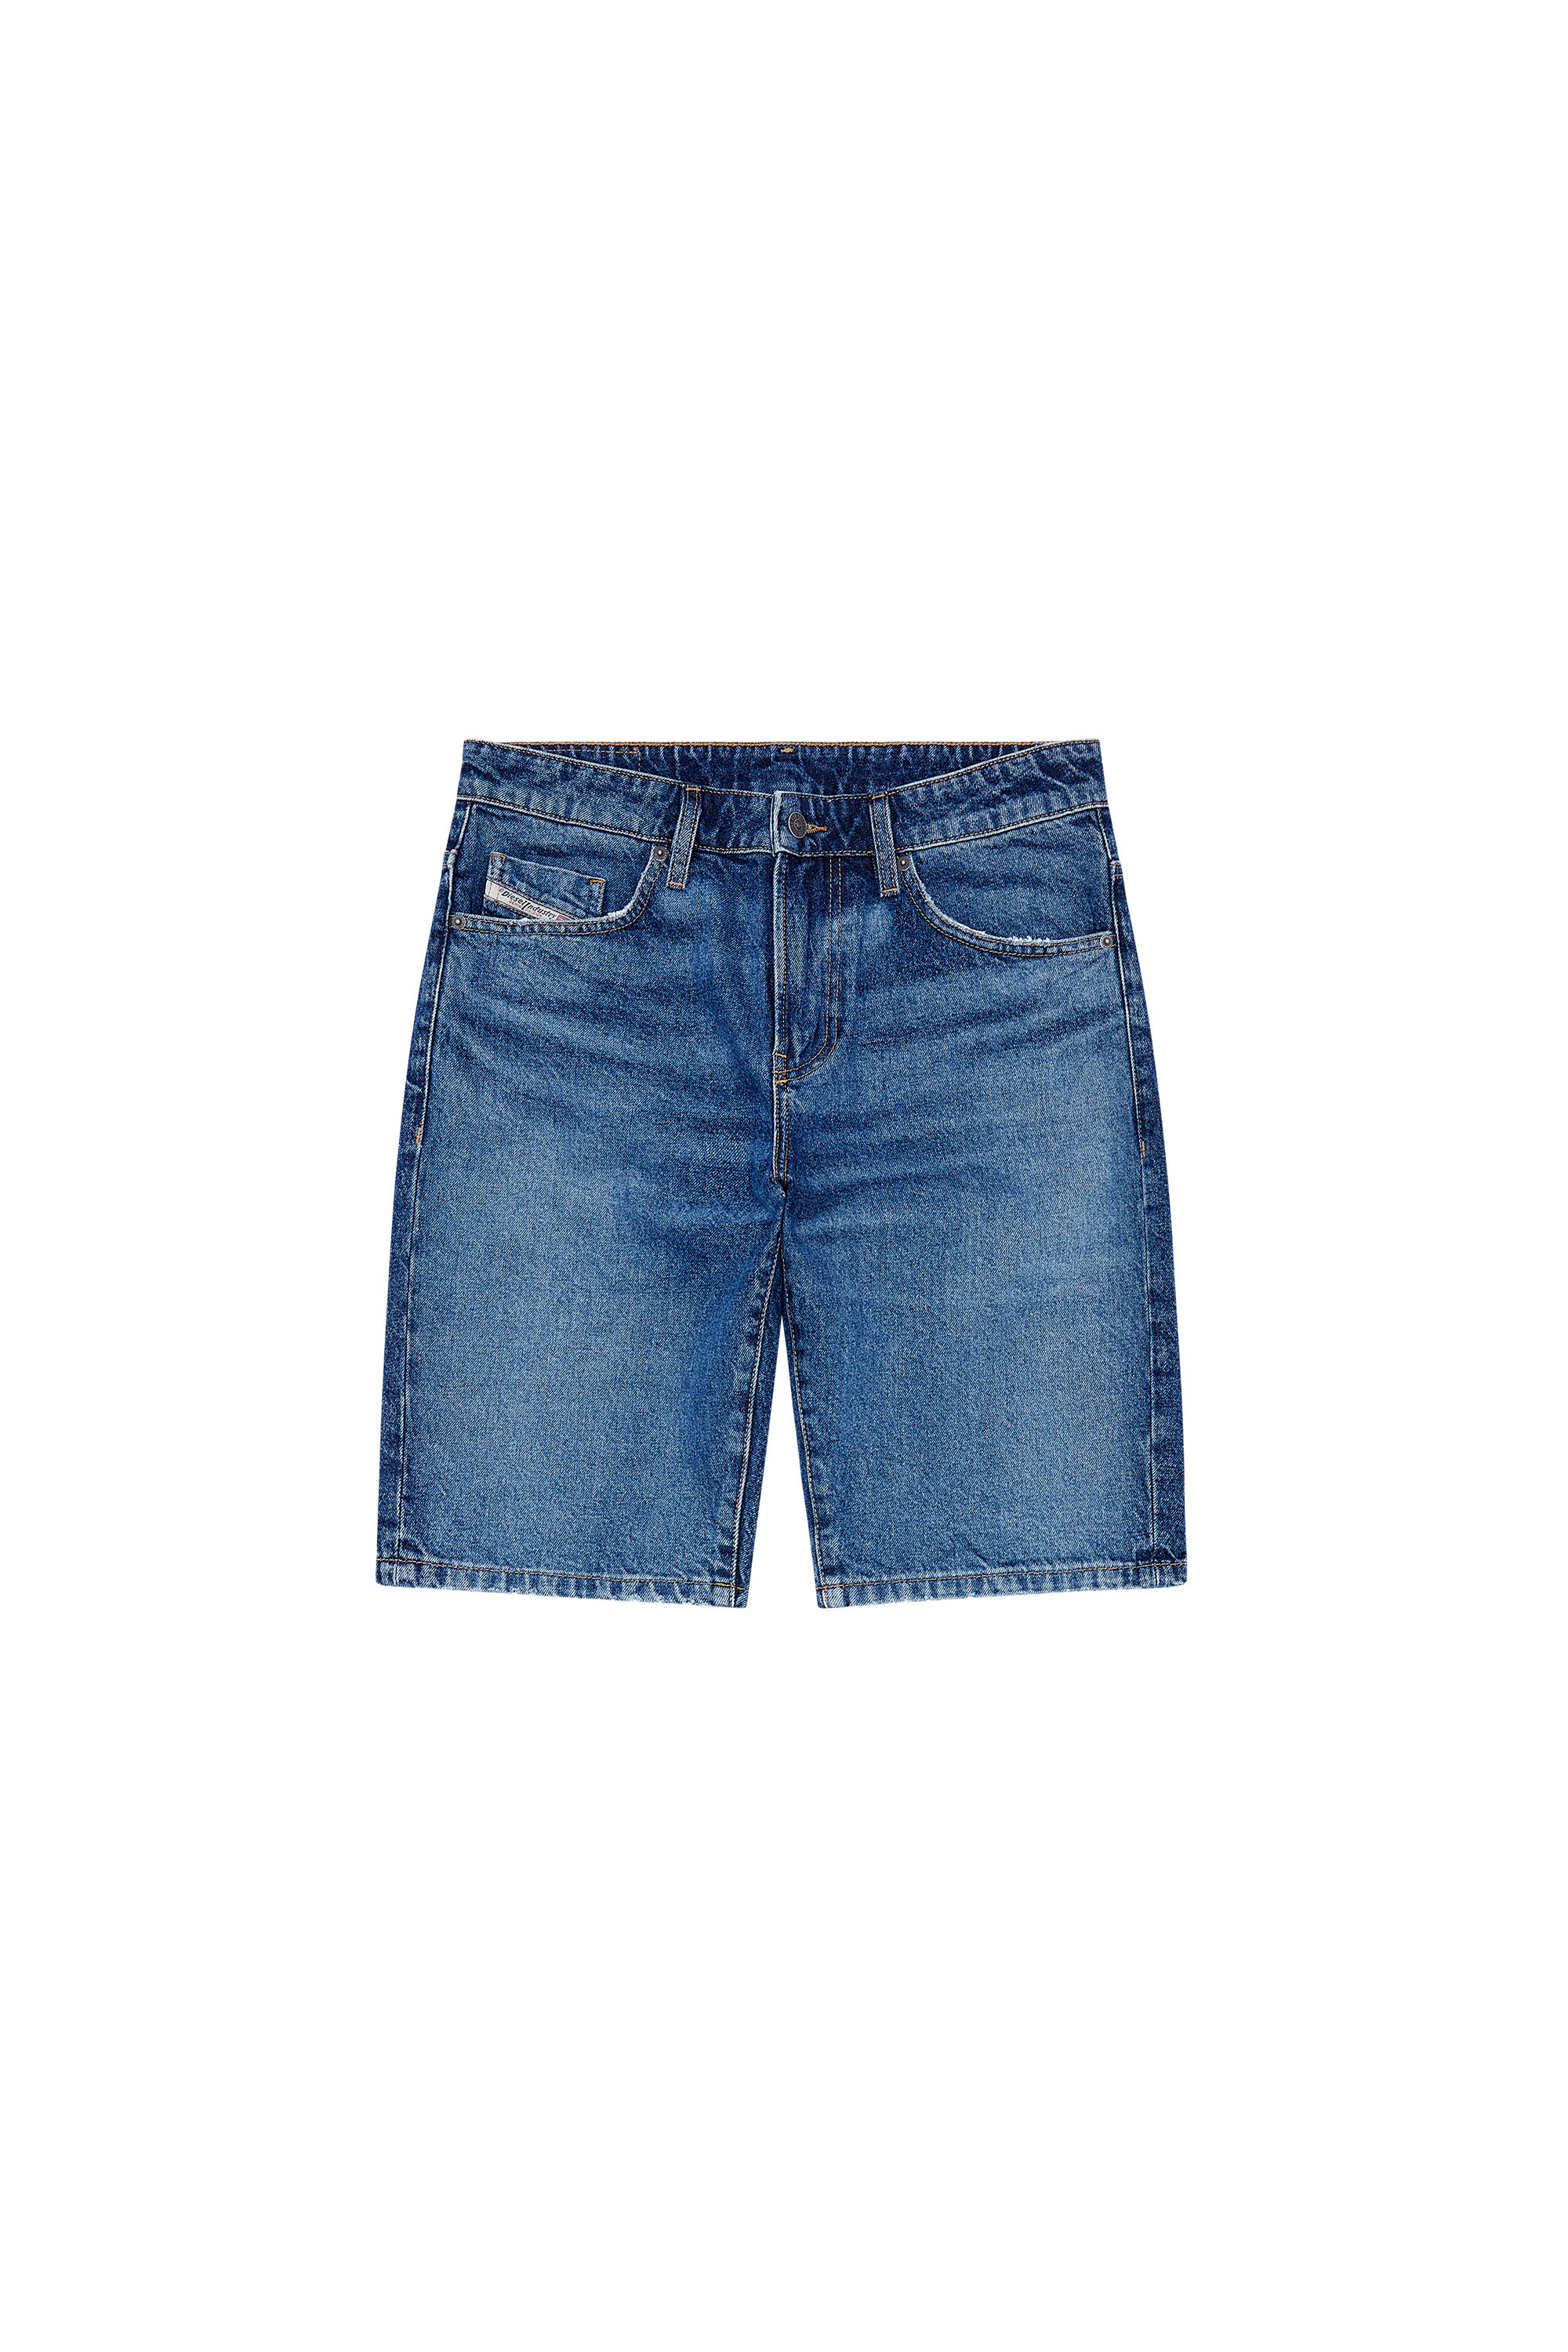 Men's Slim denim shorts